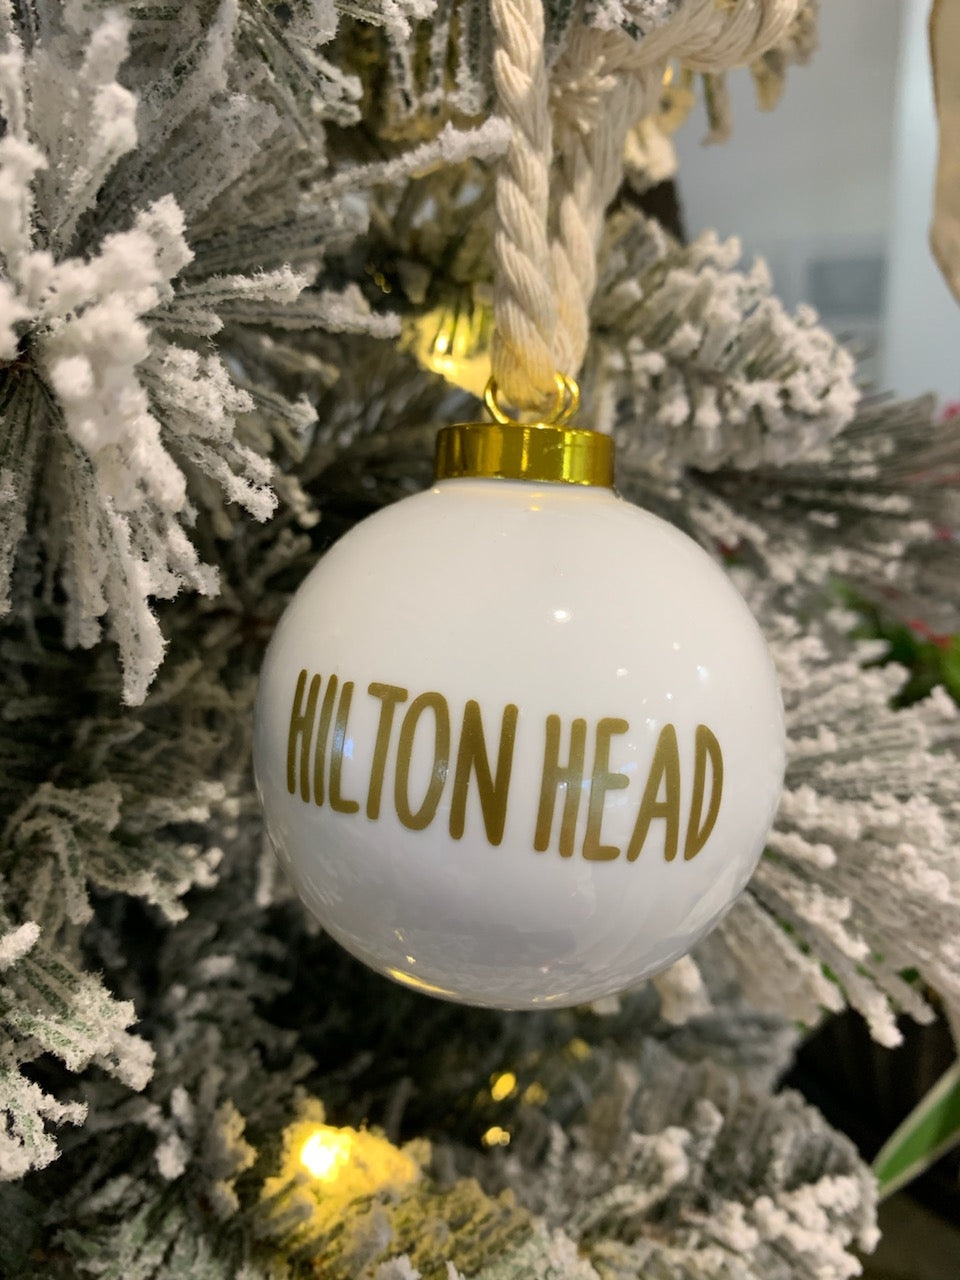 Hilton Head Ornaments